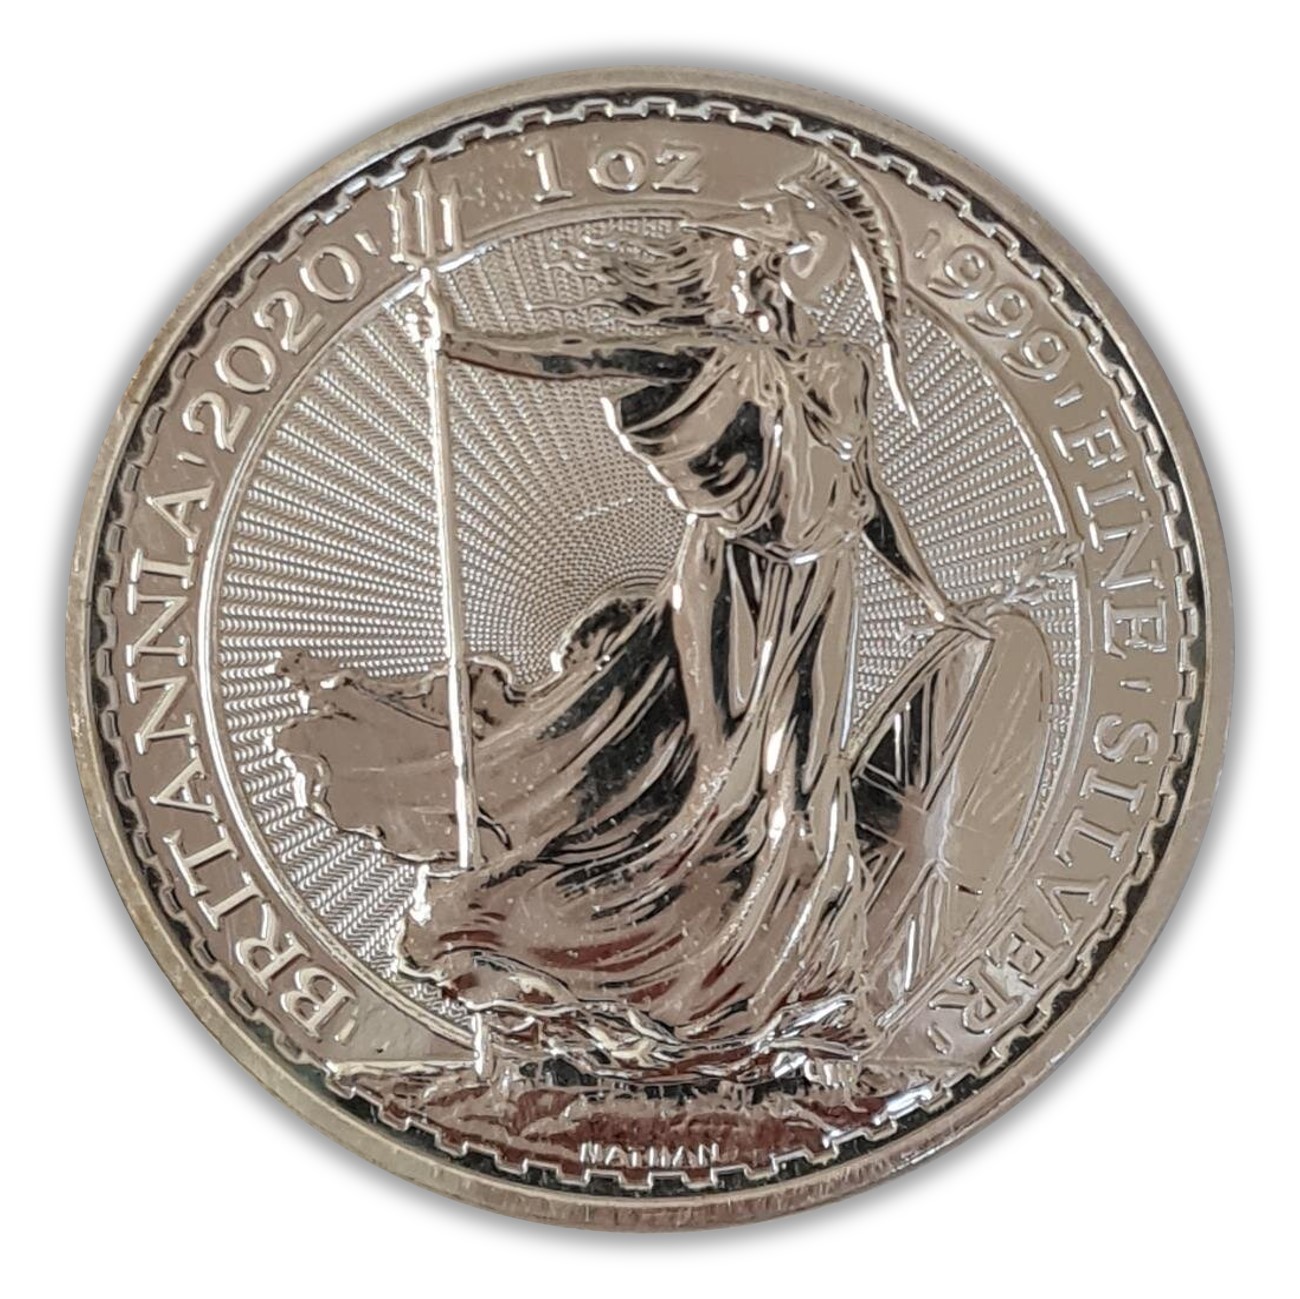 2020 Great Britain Britannia 1 oz Silver Coin